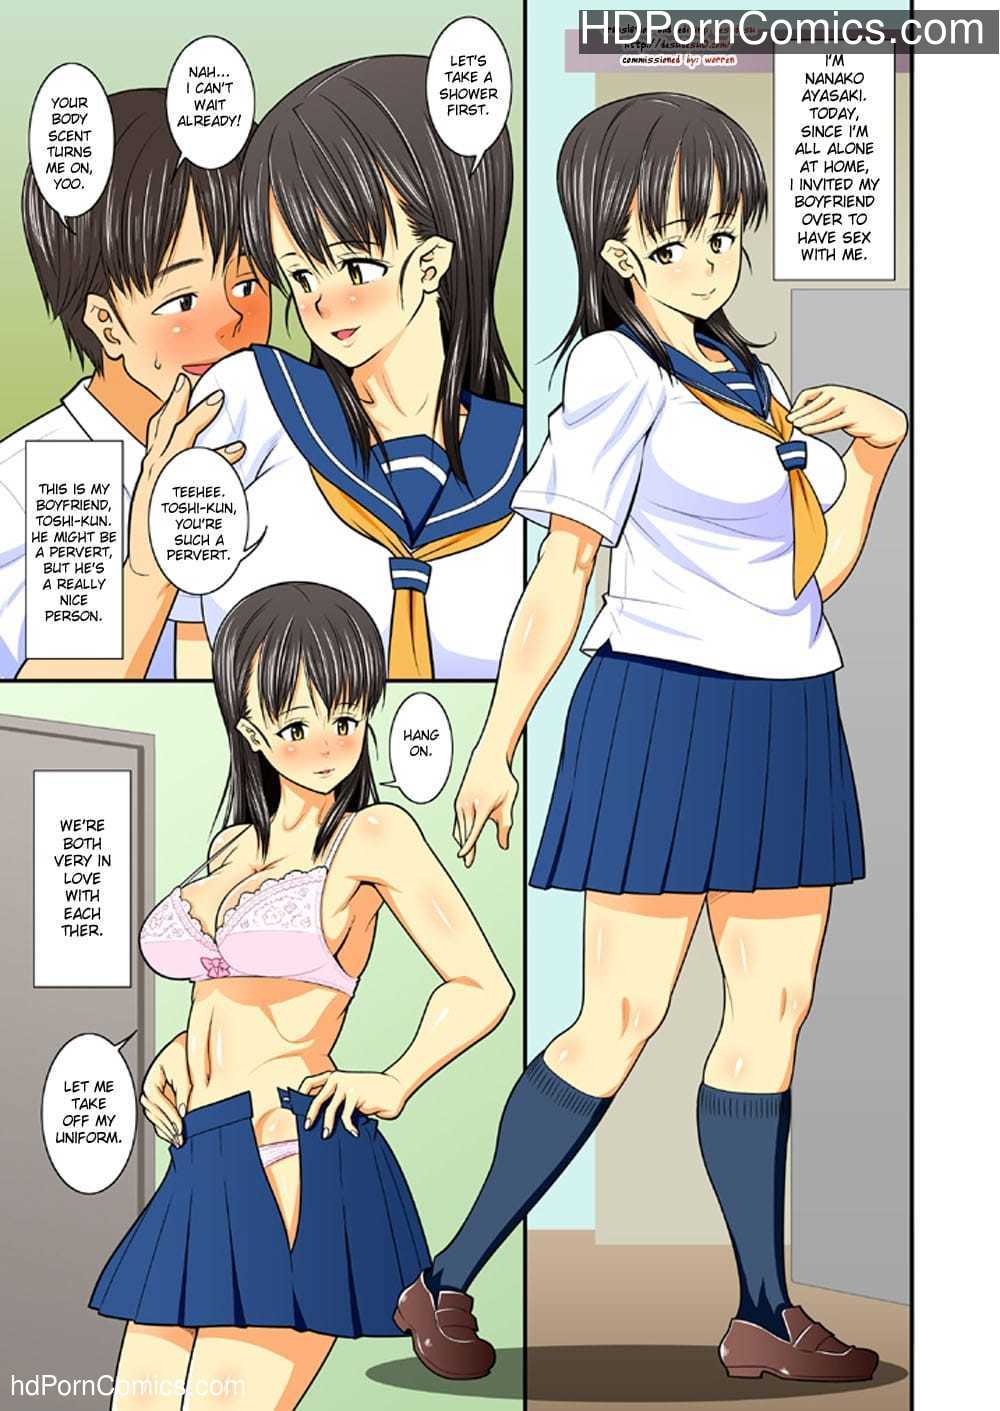 Cartoon Preggo Nude - Nanaki Inoue- Pregnant All The Time free Cartoon Porn Comic - HD Porn Comics